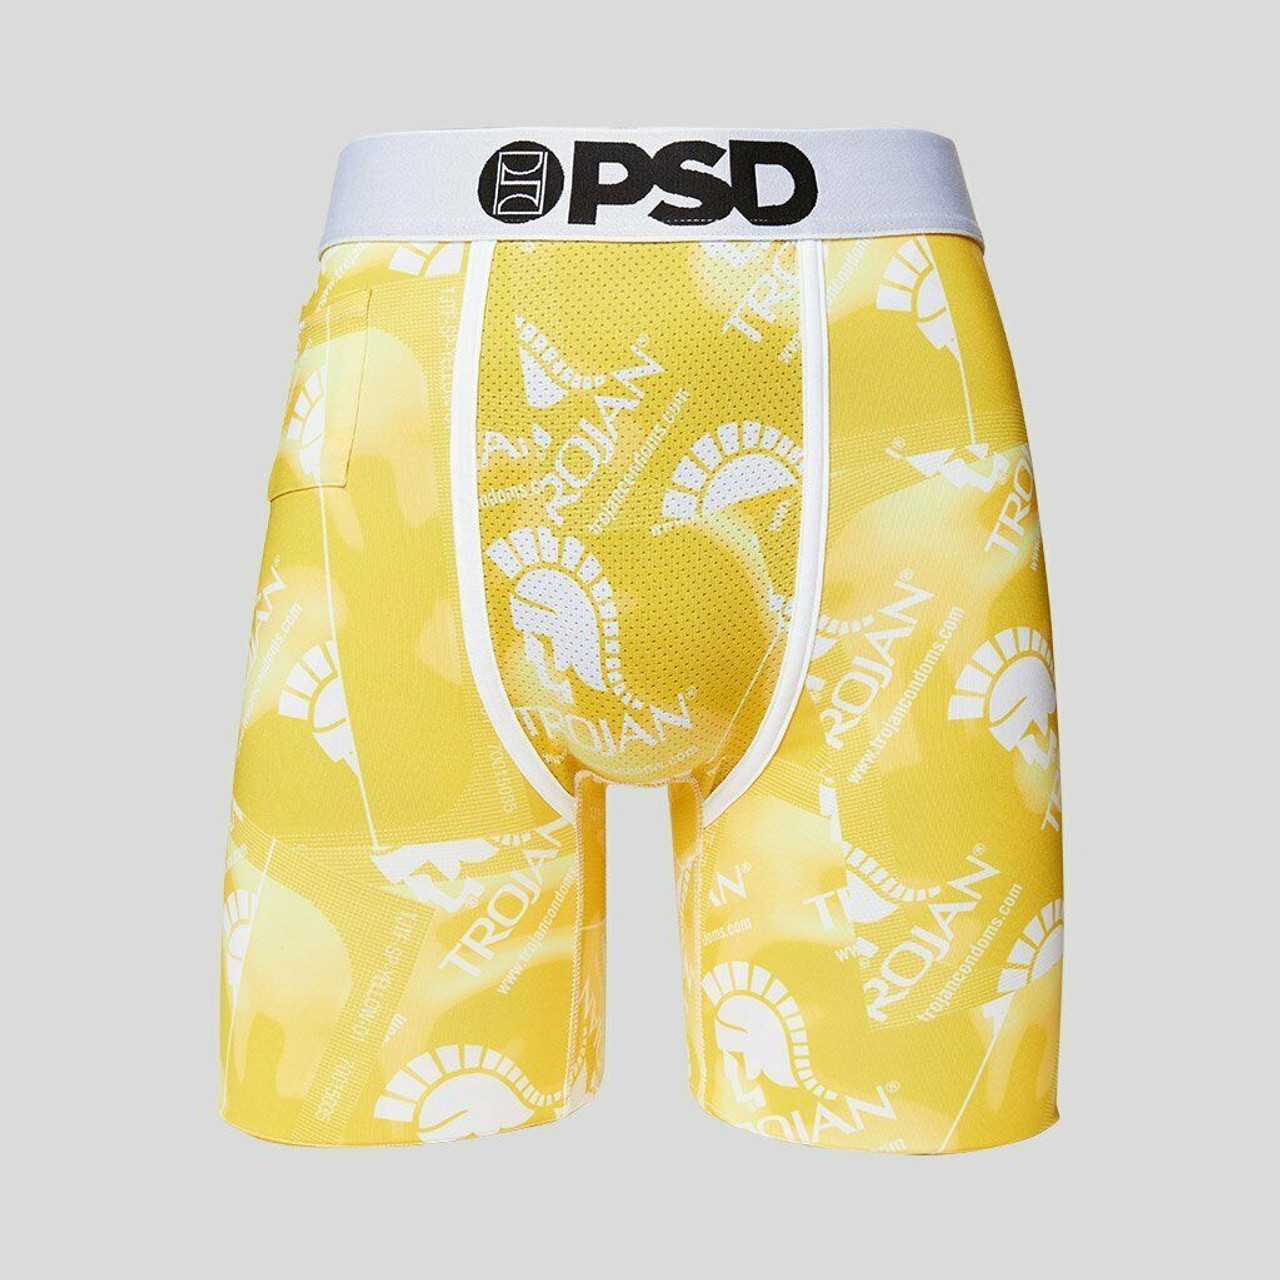 PSD Trojan Condoms Gold Pack Urban Athletic Boxers Briefs Underwear  42011034 - Fearless Apparel